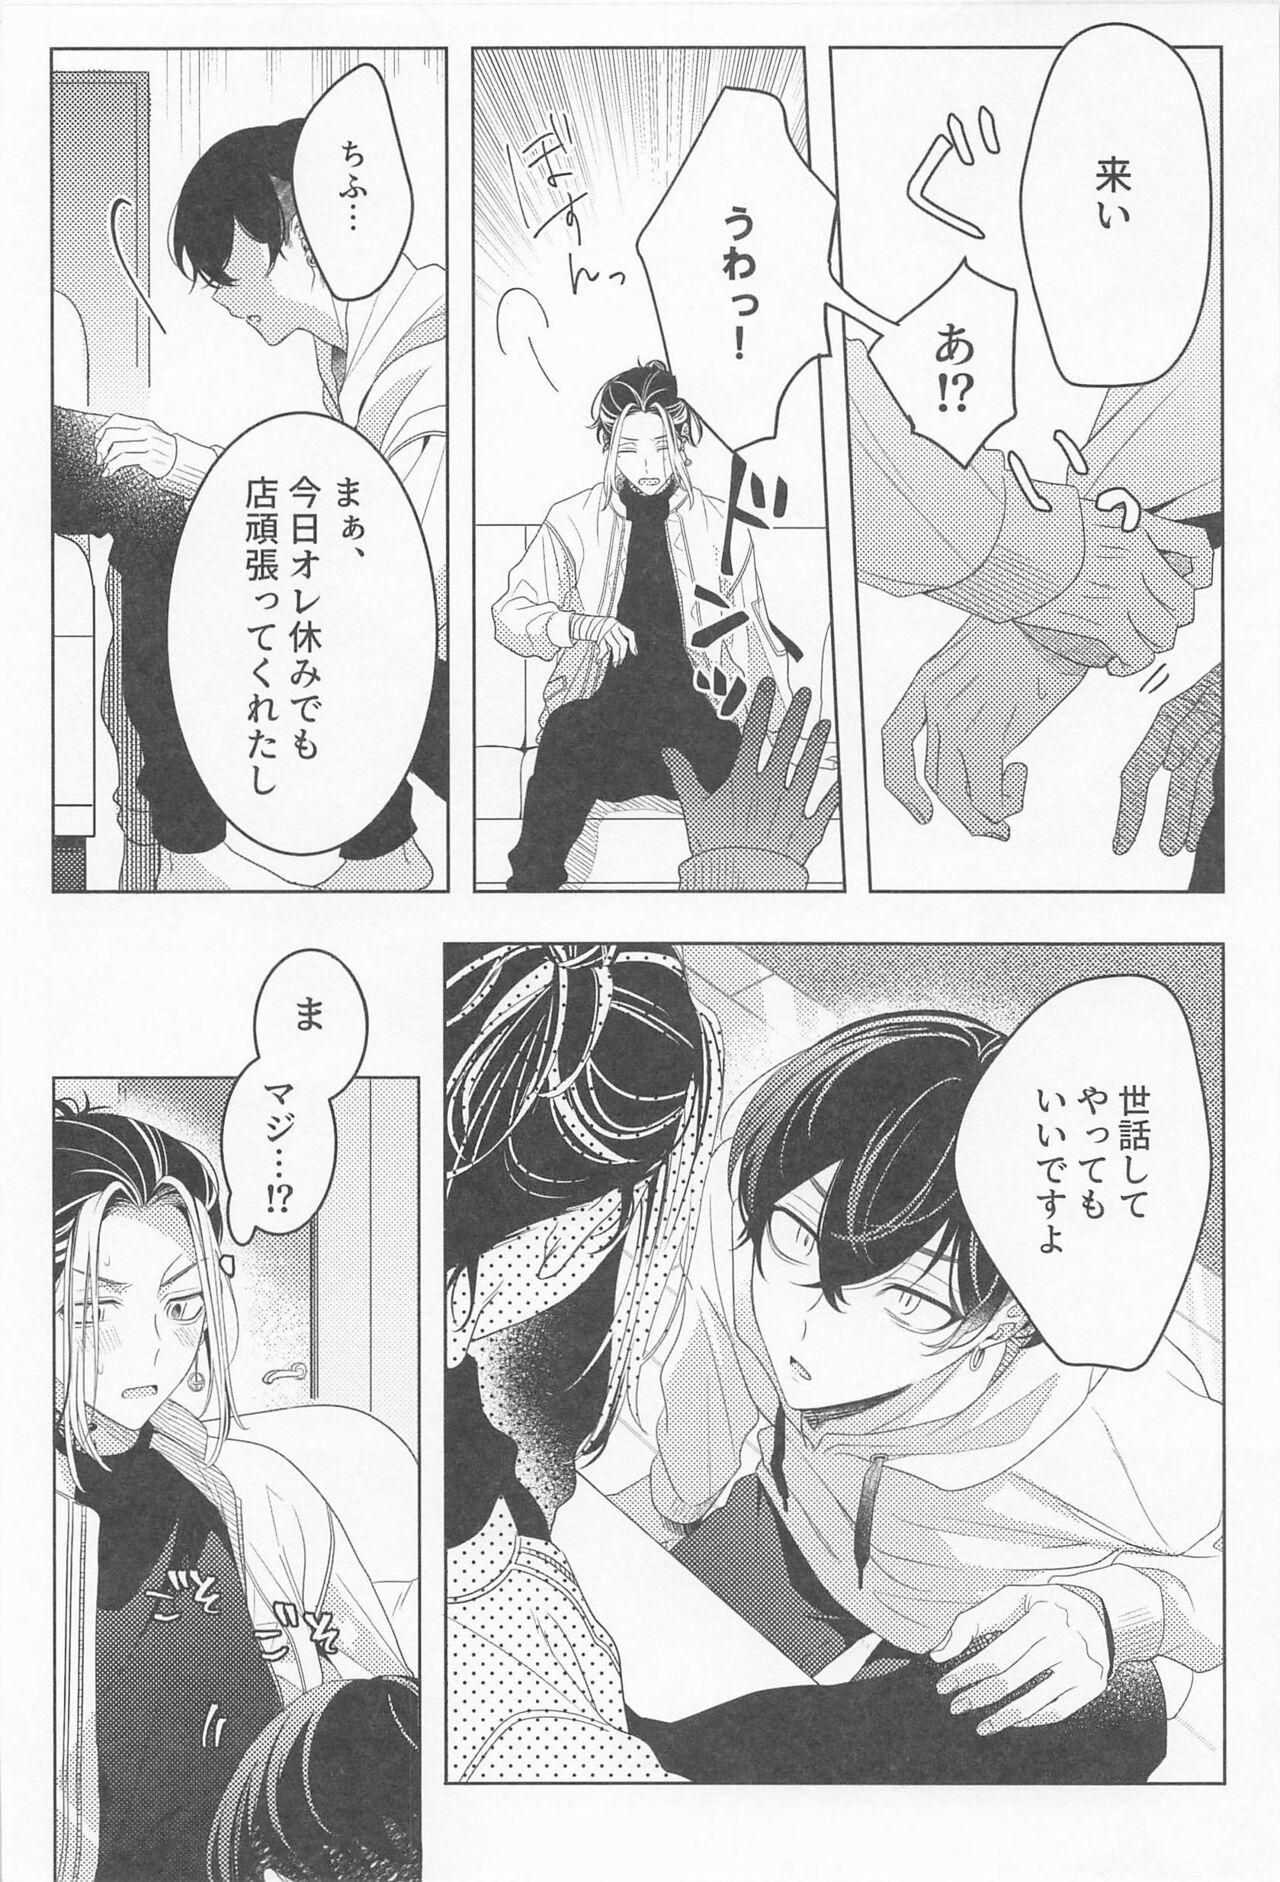 Her sukidakarashimpaishite - Tokyo revengers Highschool - Page 11